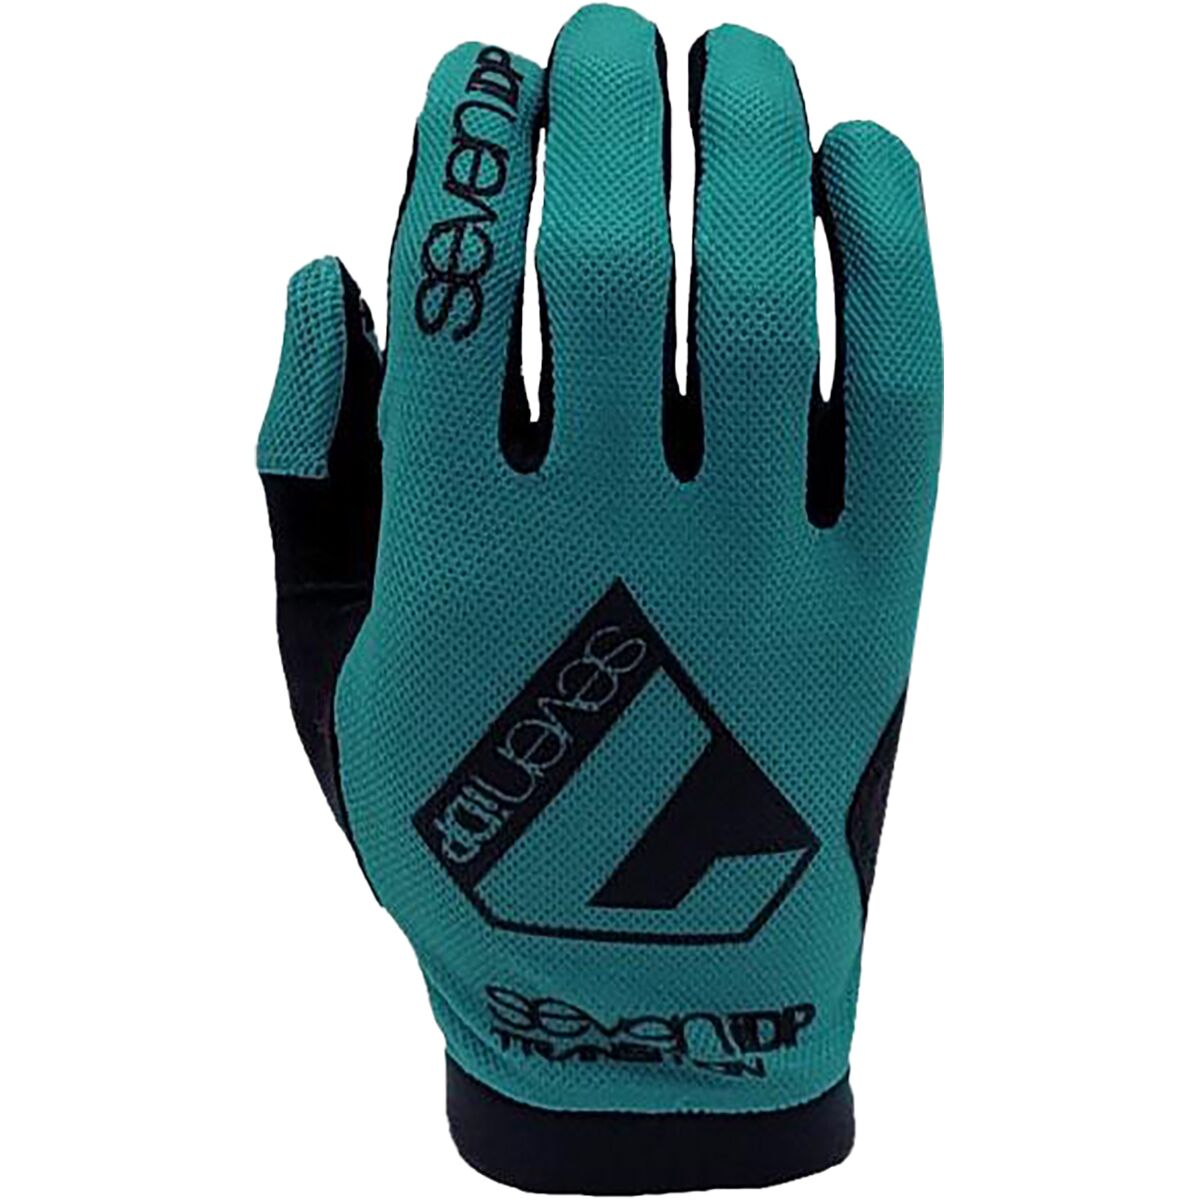 7 Protection Transition Glove - Men's Blue, XL